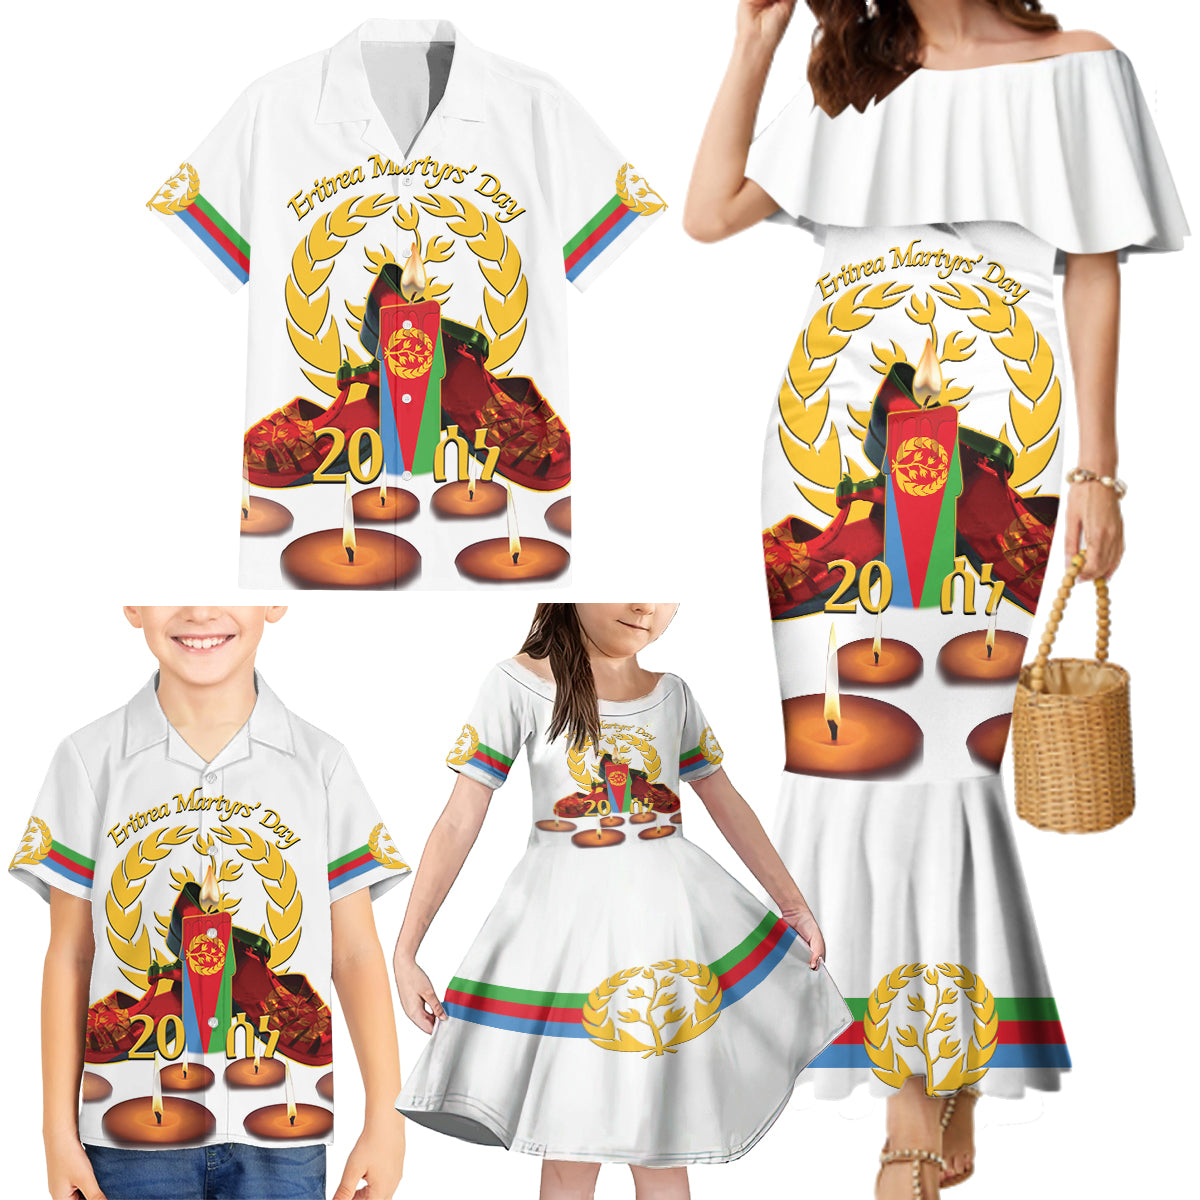 Custom Eritrea Martyrs' Day Family Matching Mermaid Dress and Hawaiian Shirt 20 June Shida Shoes With Candles - White